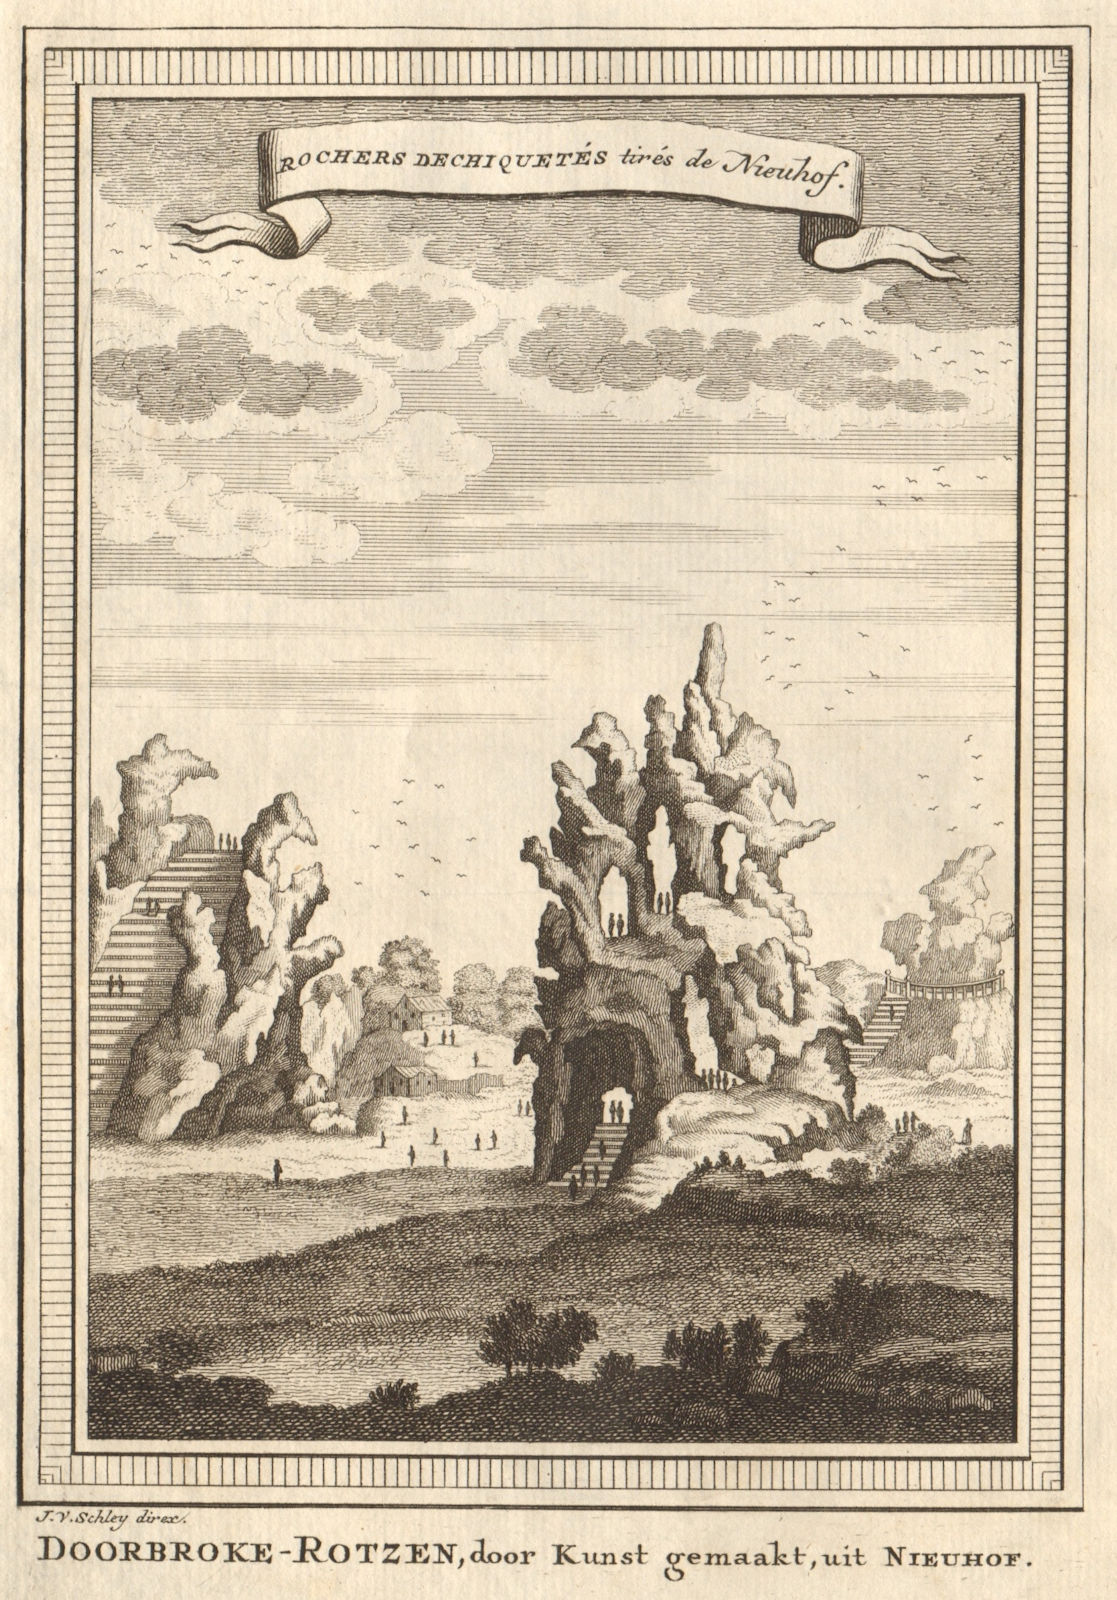 Associate Product 'Rochers déchiquetés'. China. Ragged cliffs, taken from Nieuhof. SCHLEY 1749